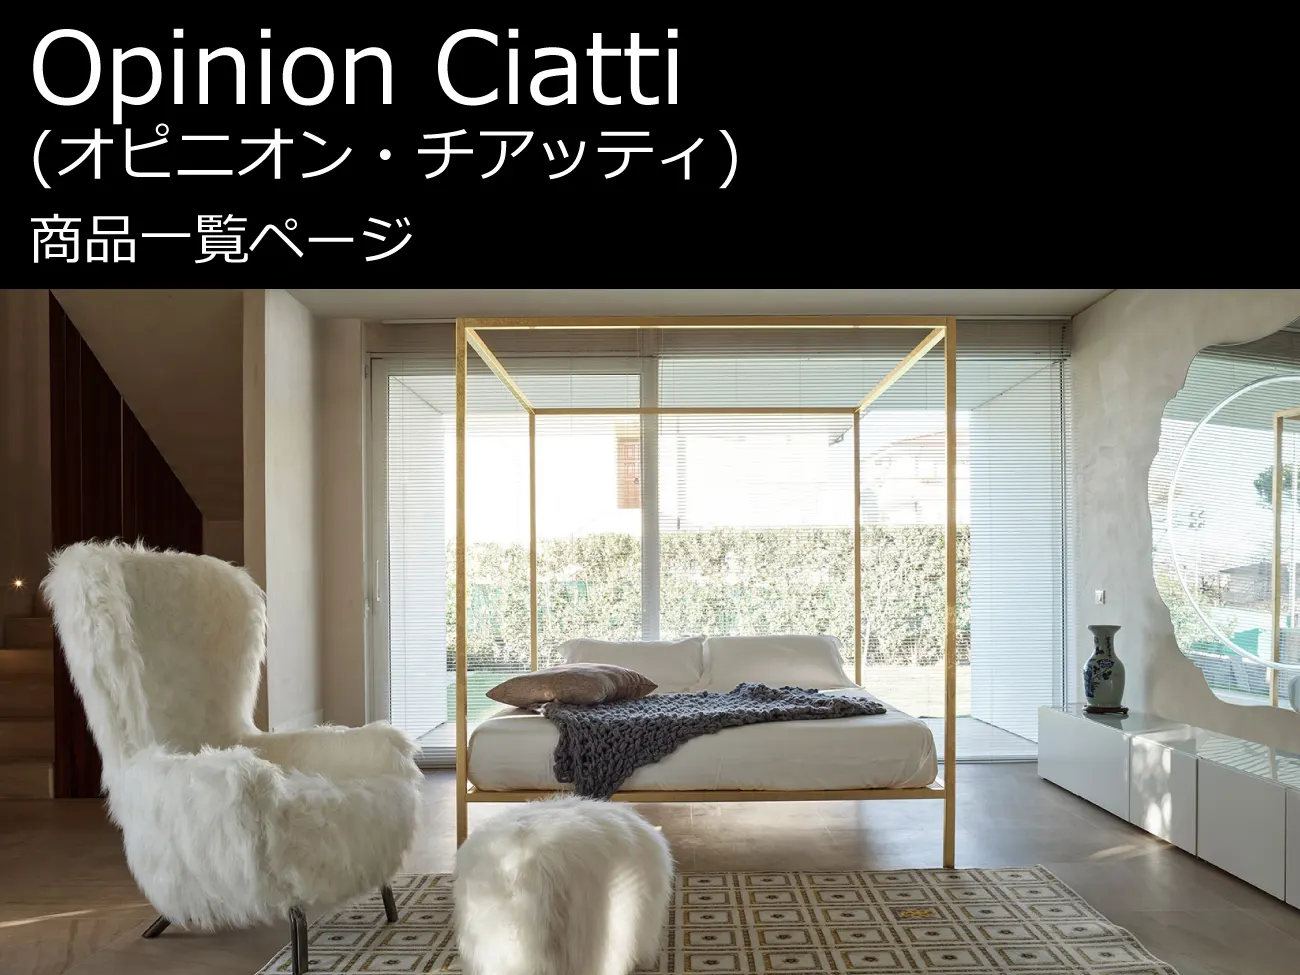 Opinion Ciatti (オピニオン・チアッティ) 商品一覧 | イタリア家具を 